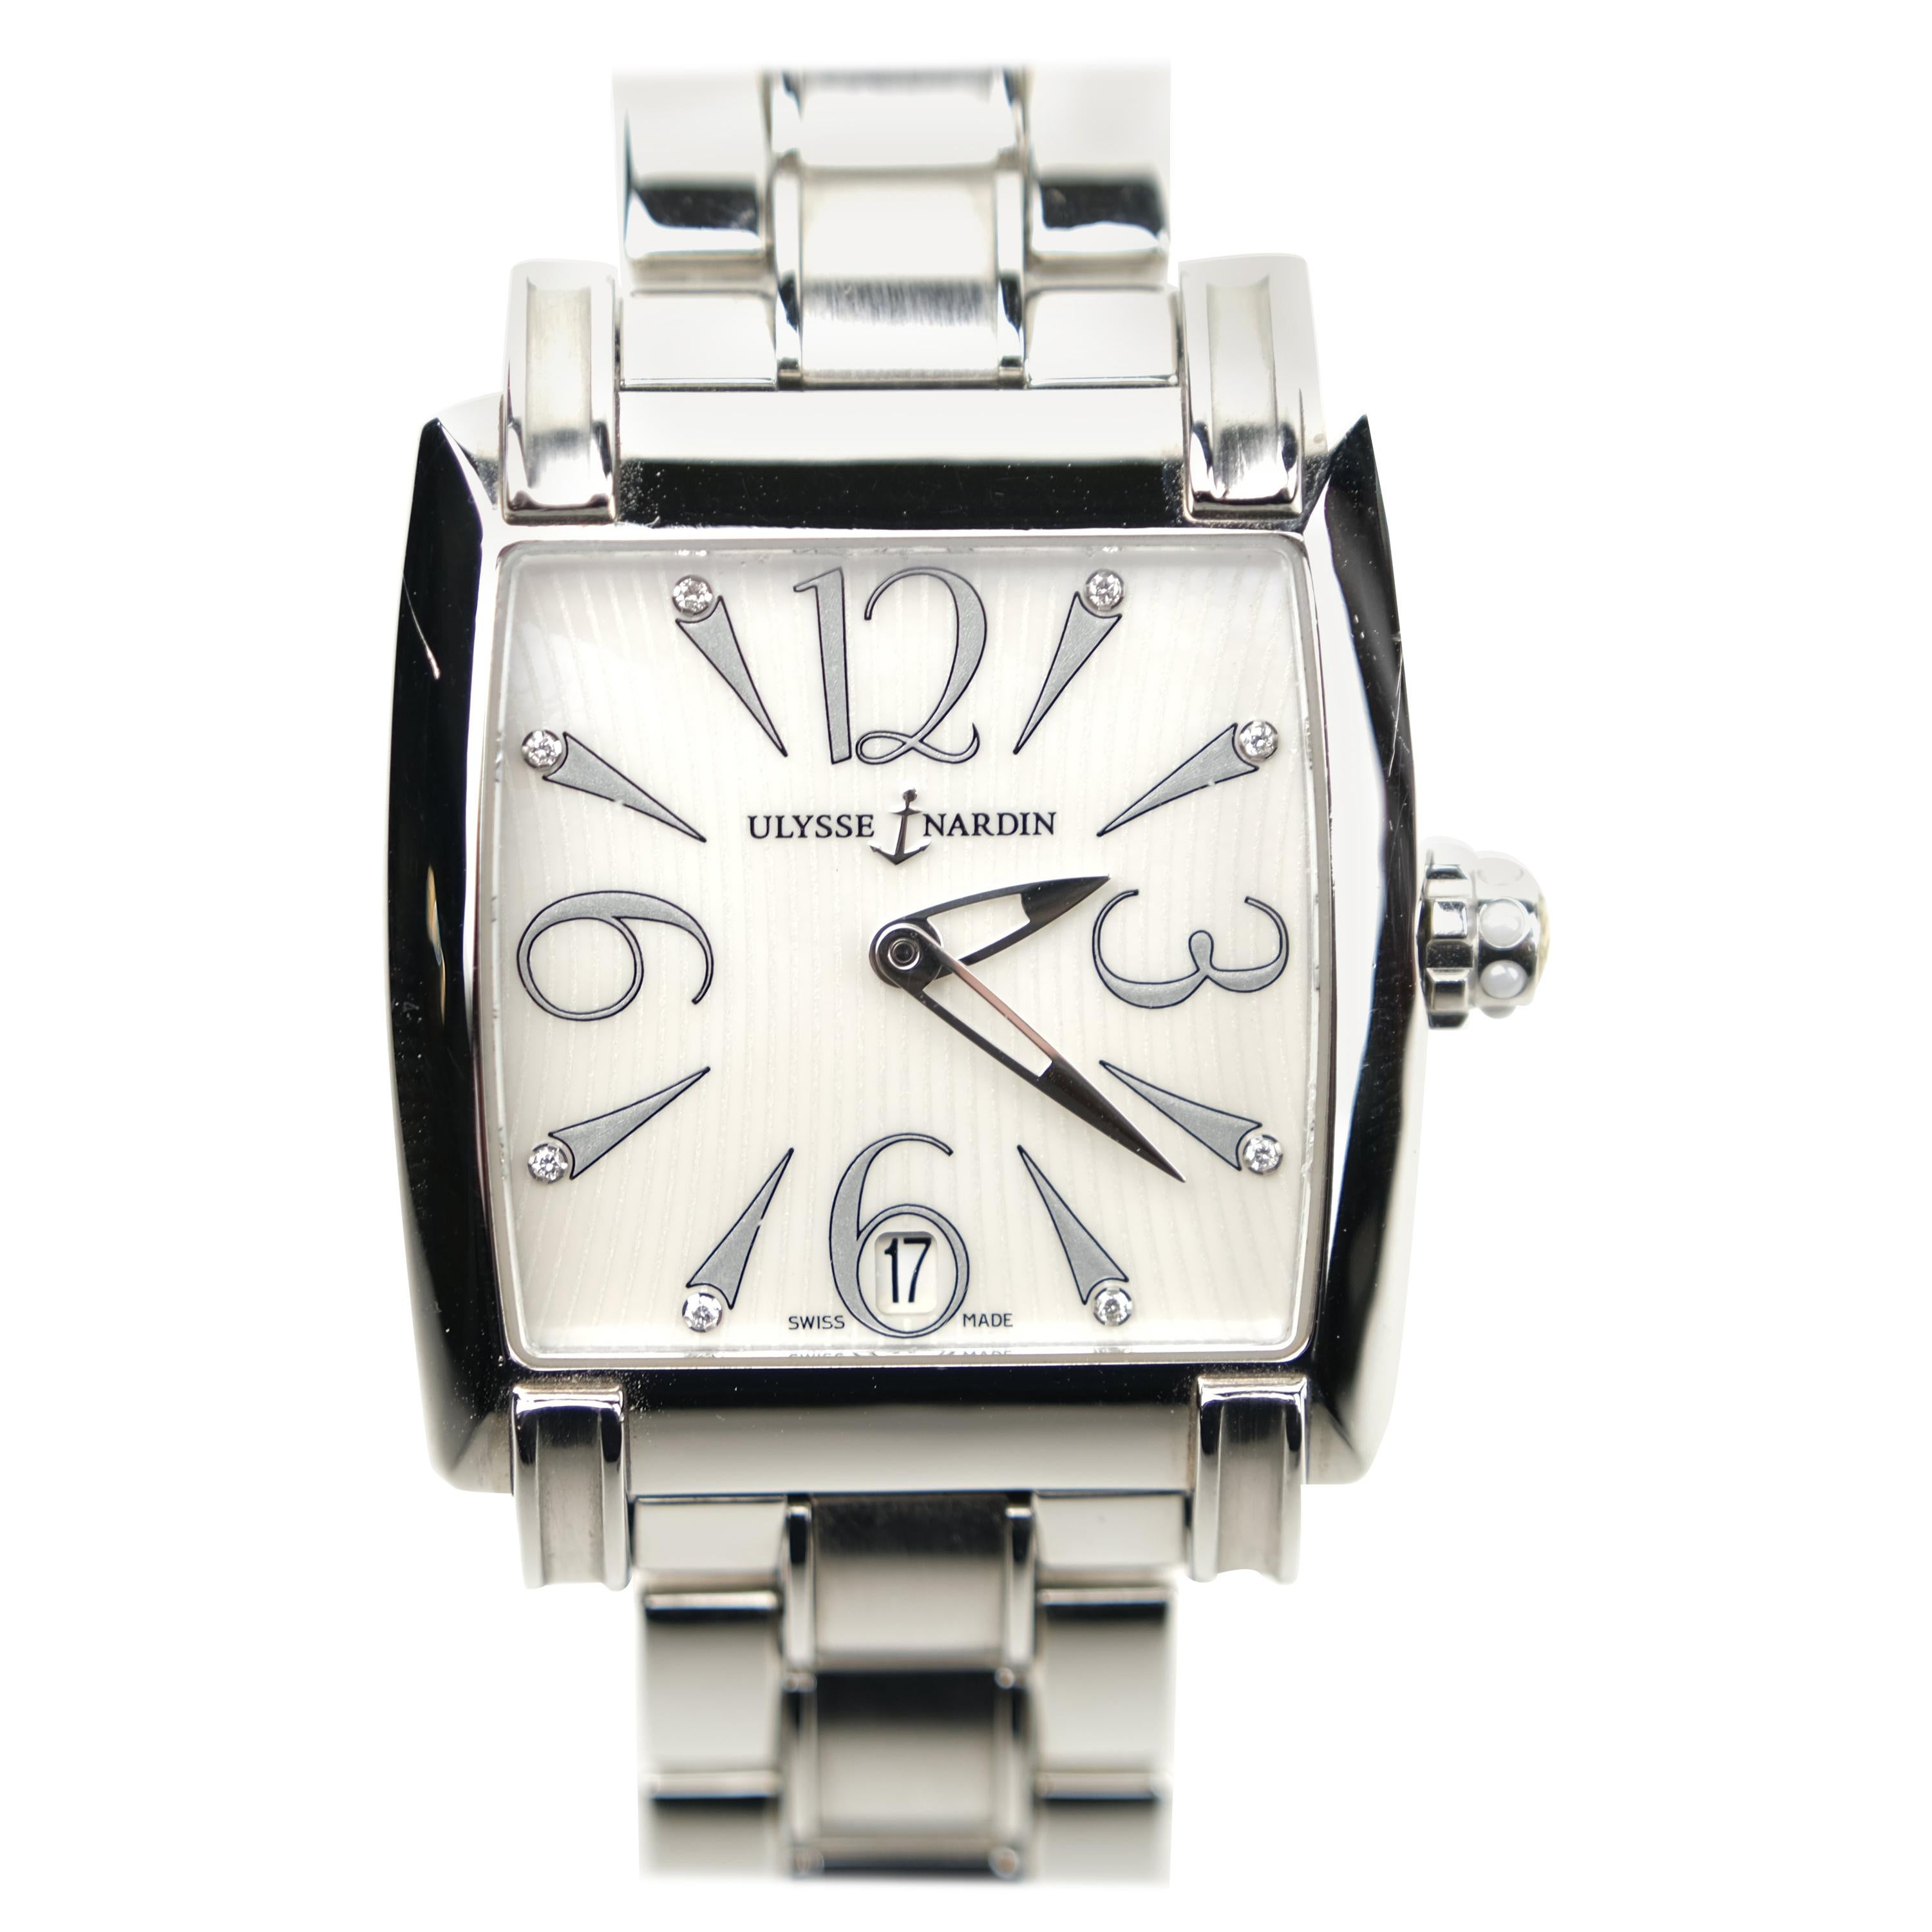 Ulysse Nardin Caprice Stainless Steel Diamond Watch #133-91/691